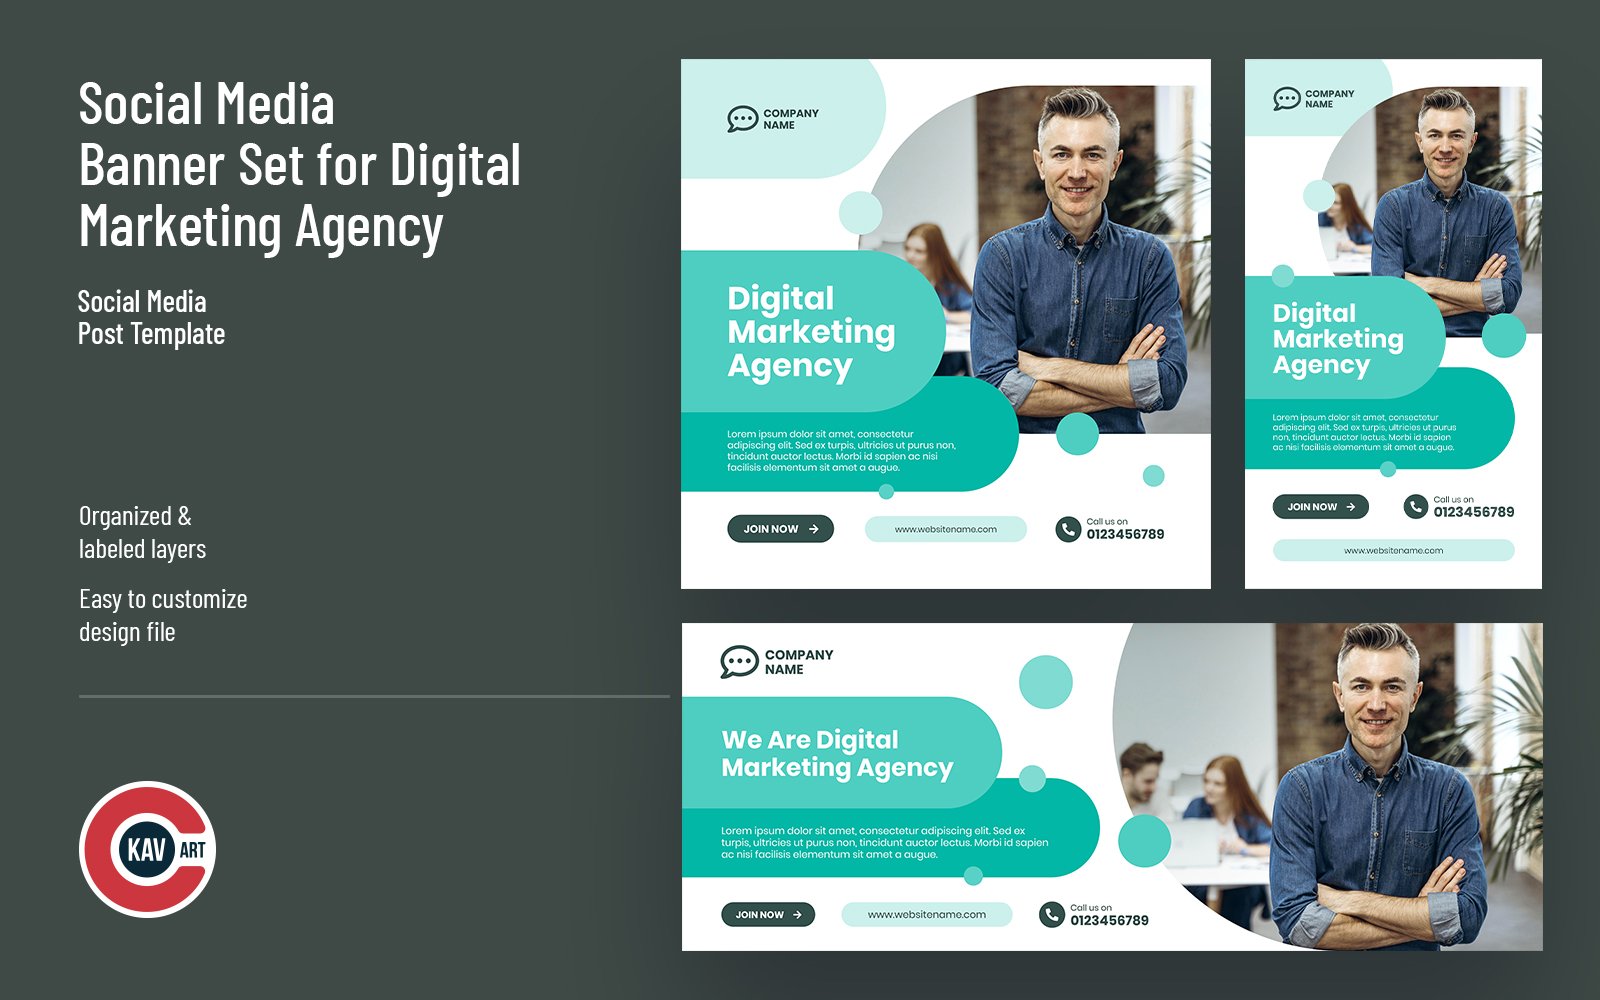 Social Media Banner Set for Digital Marketing Agency